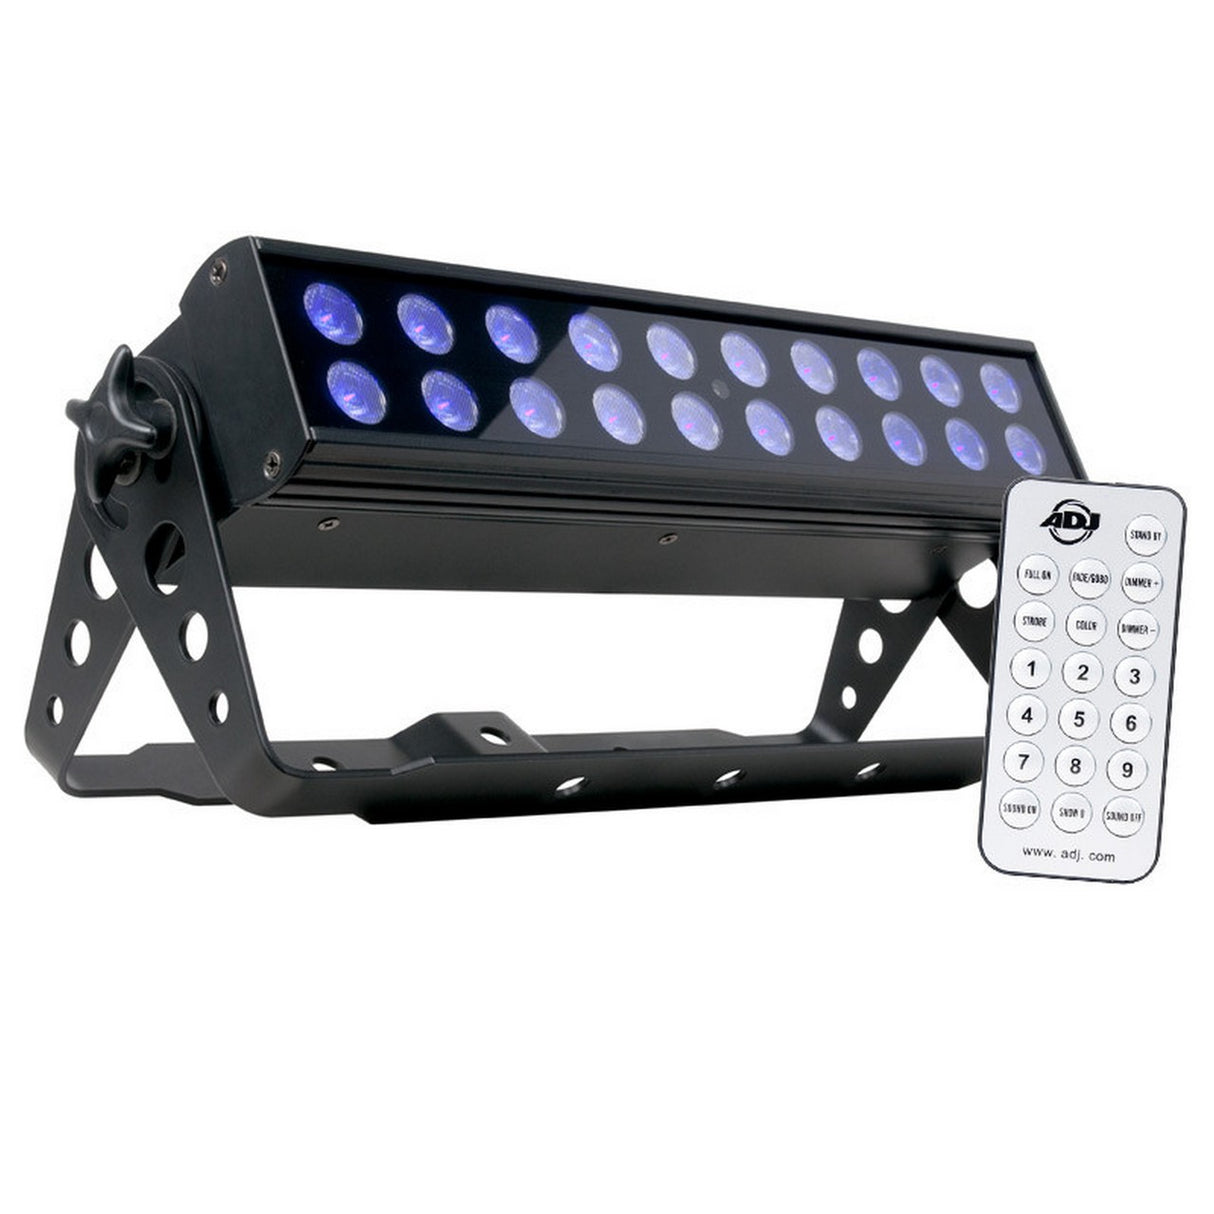 ADJ UV LED BAR 20 IR | High Output Ultraviolet LED Blacklight